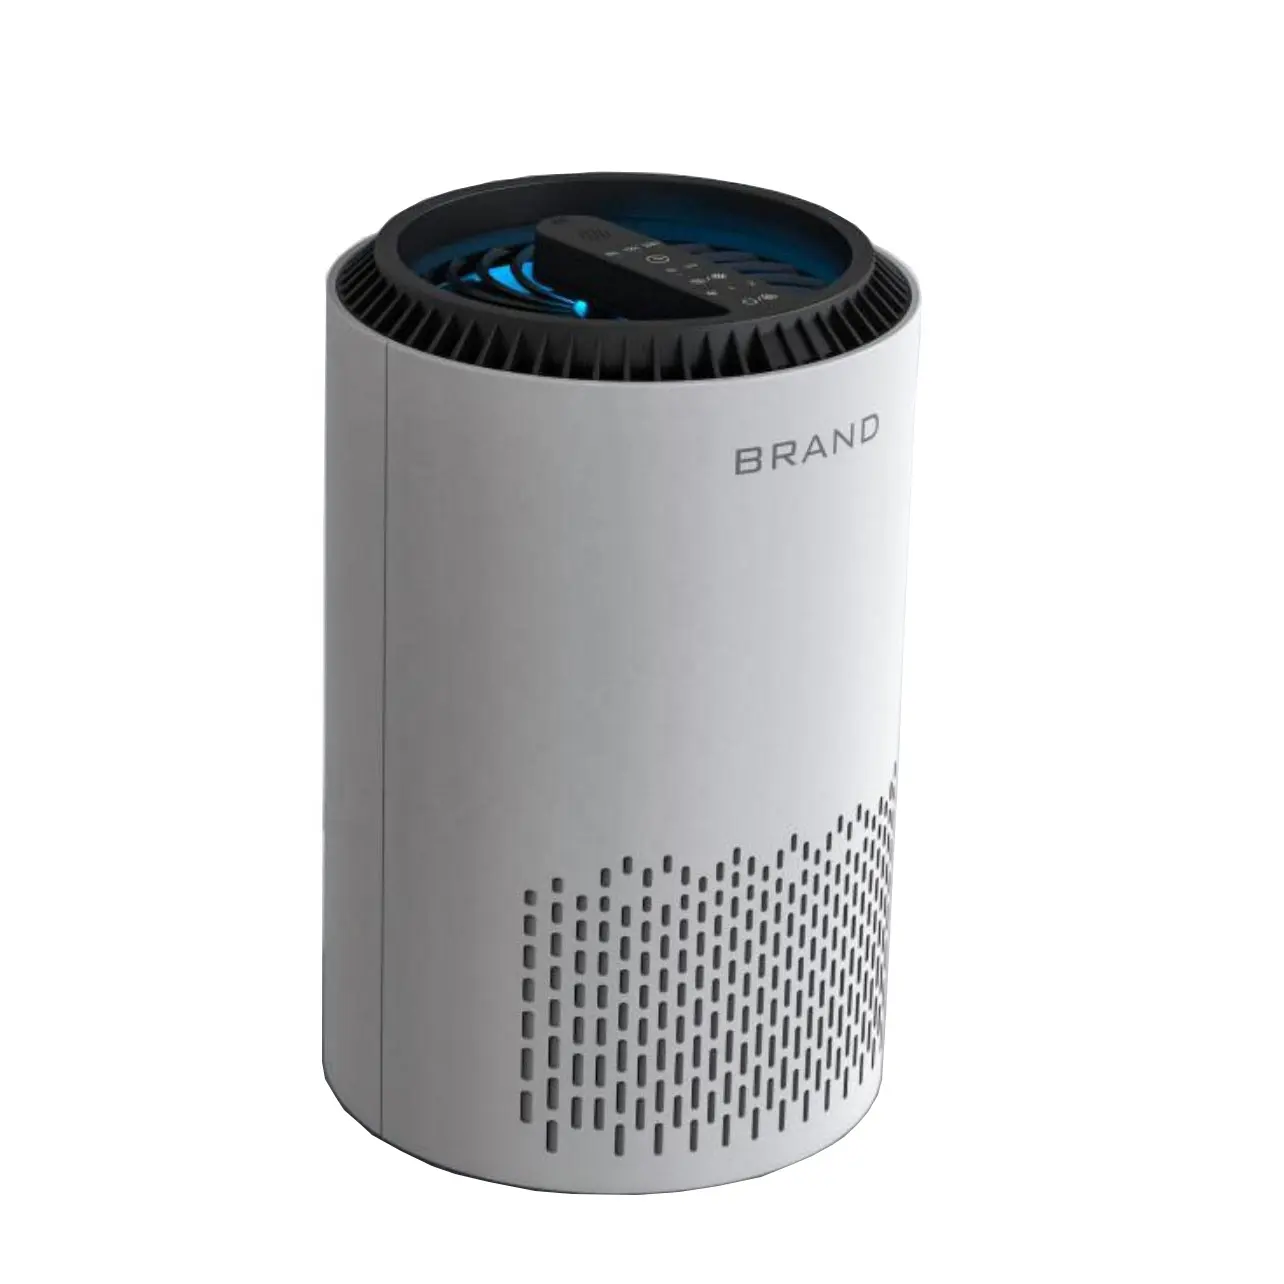 Douhe hepa filter usb desktop air purifier room personal portable home air purifier